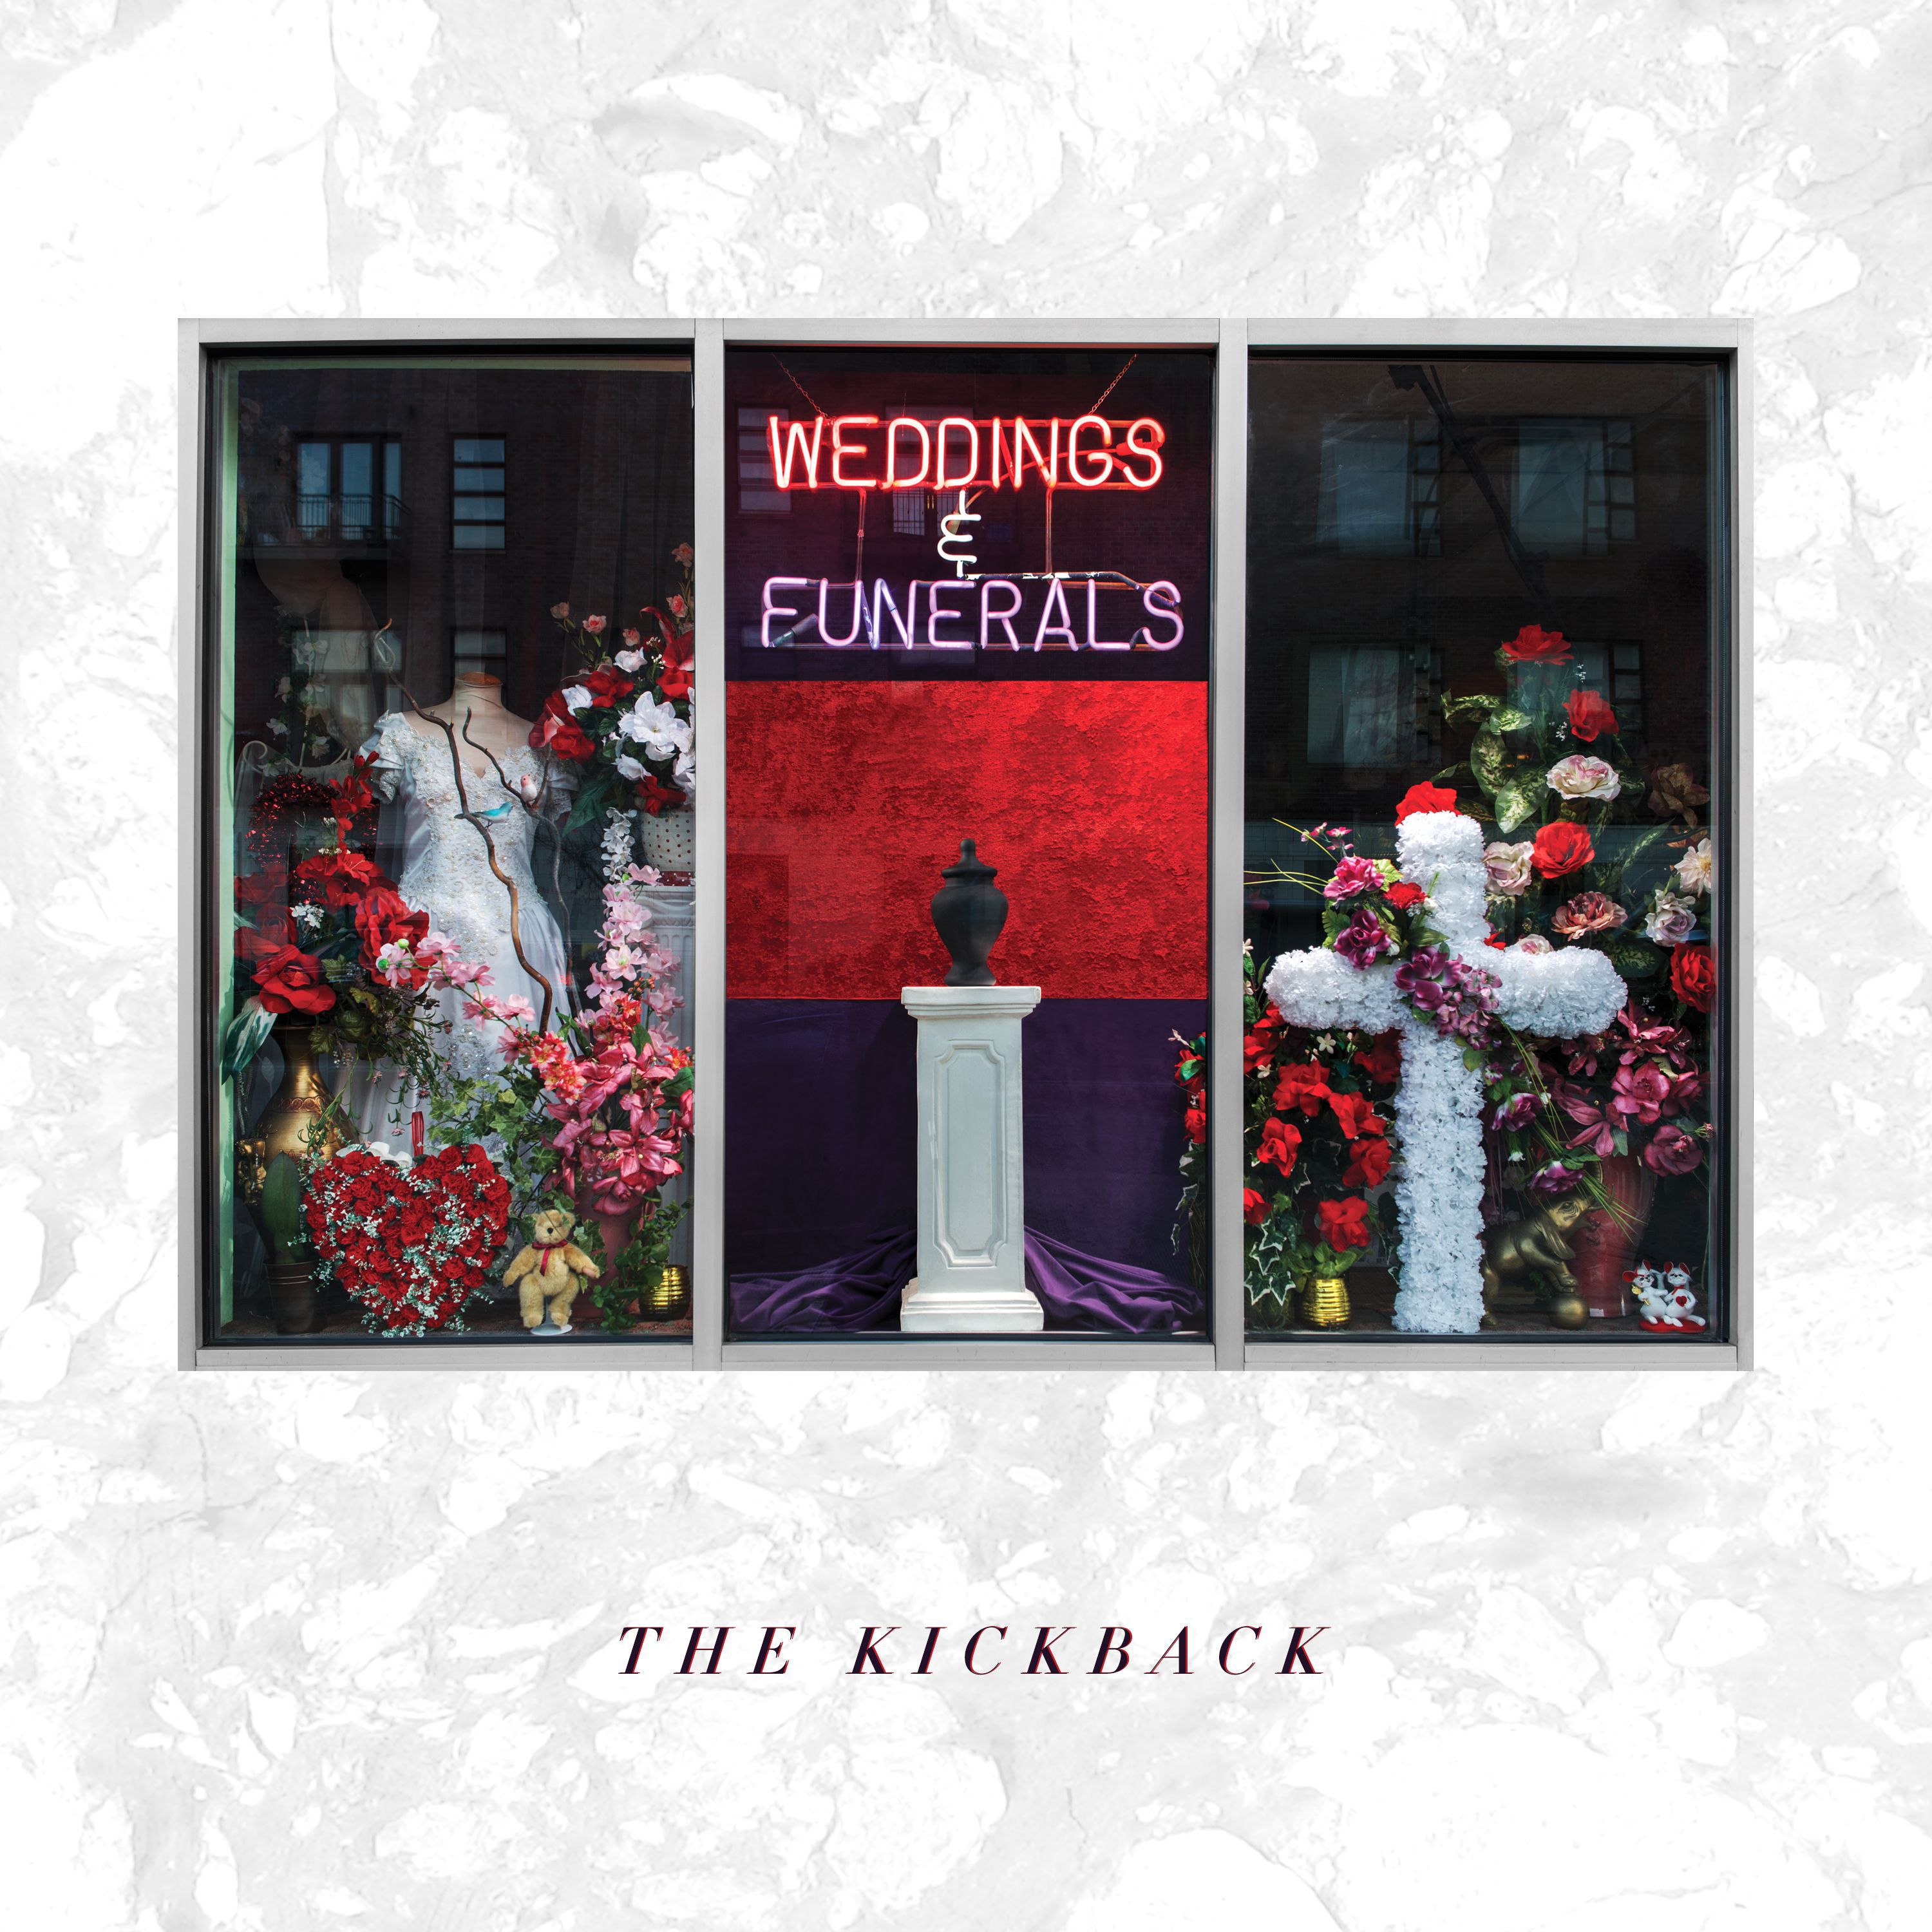 the kickback weddings and funerals The Kickback return with sophomore album, Weddings and Funerals: Stream